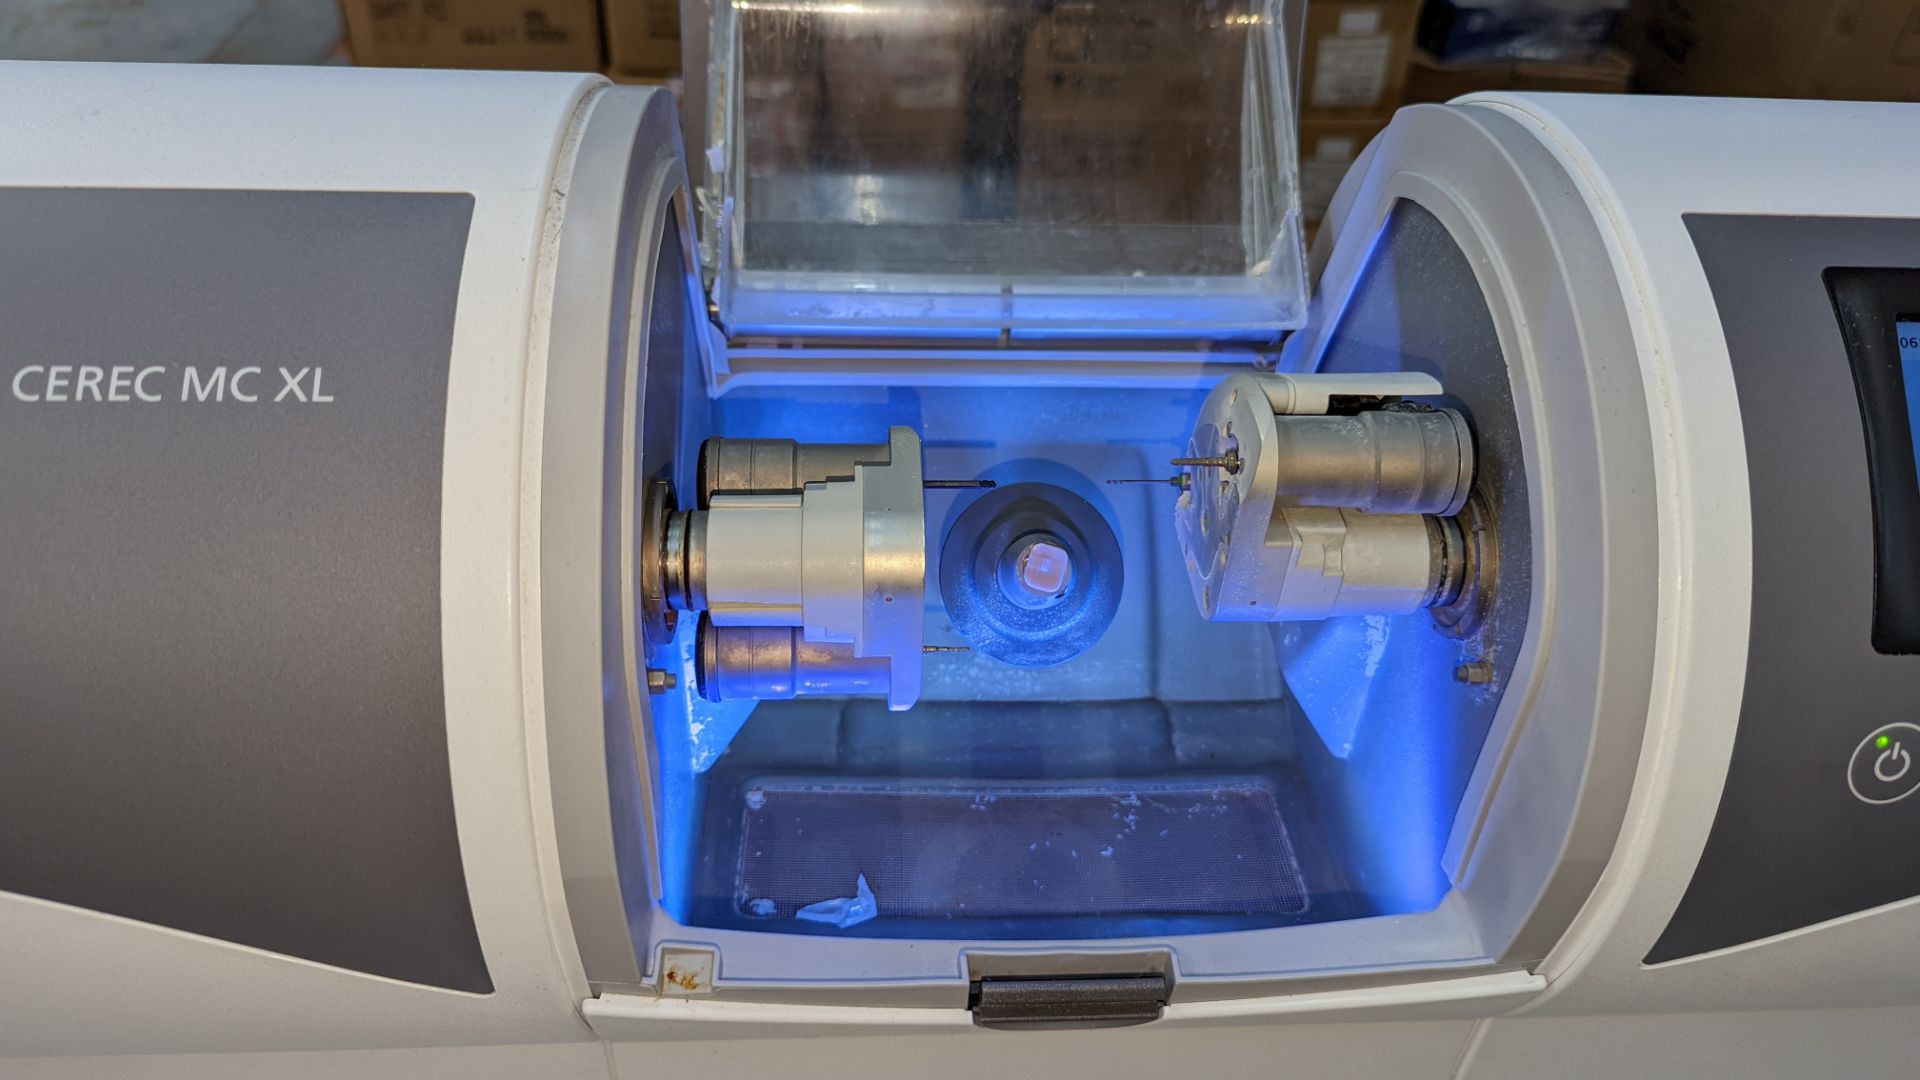 Sirona Cerec MC XL milling machine. - Image 14 of 21